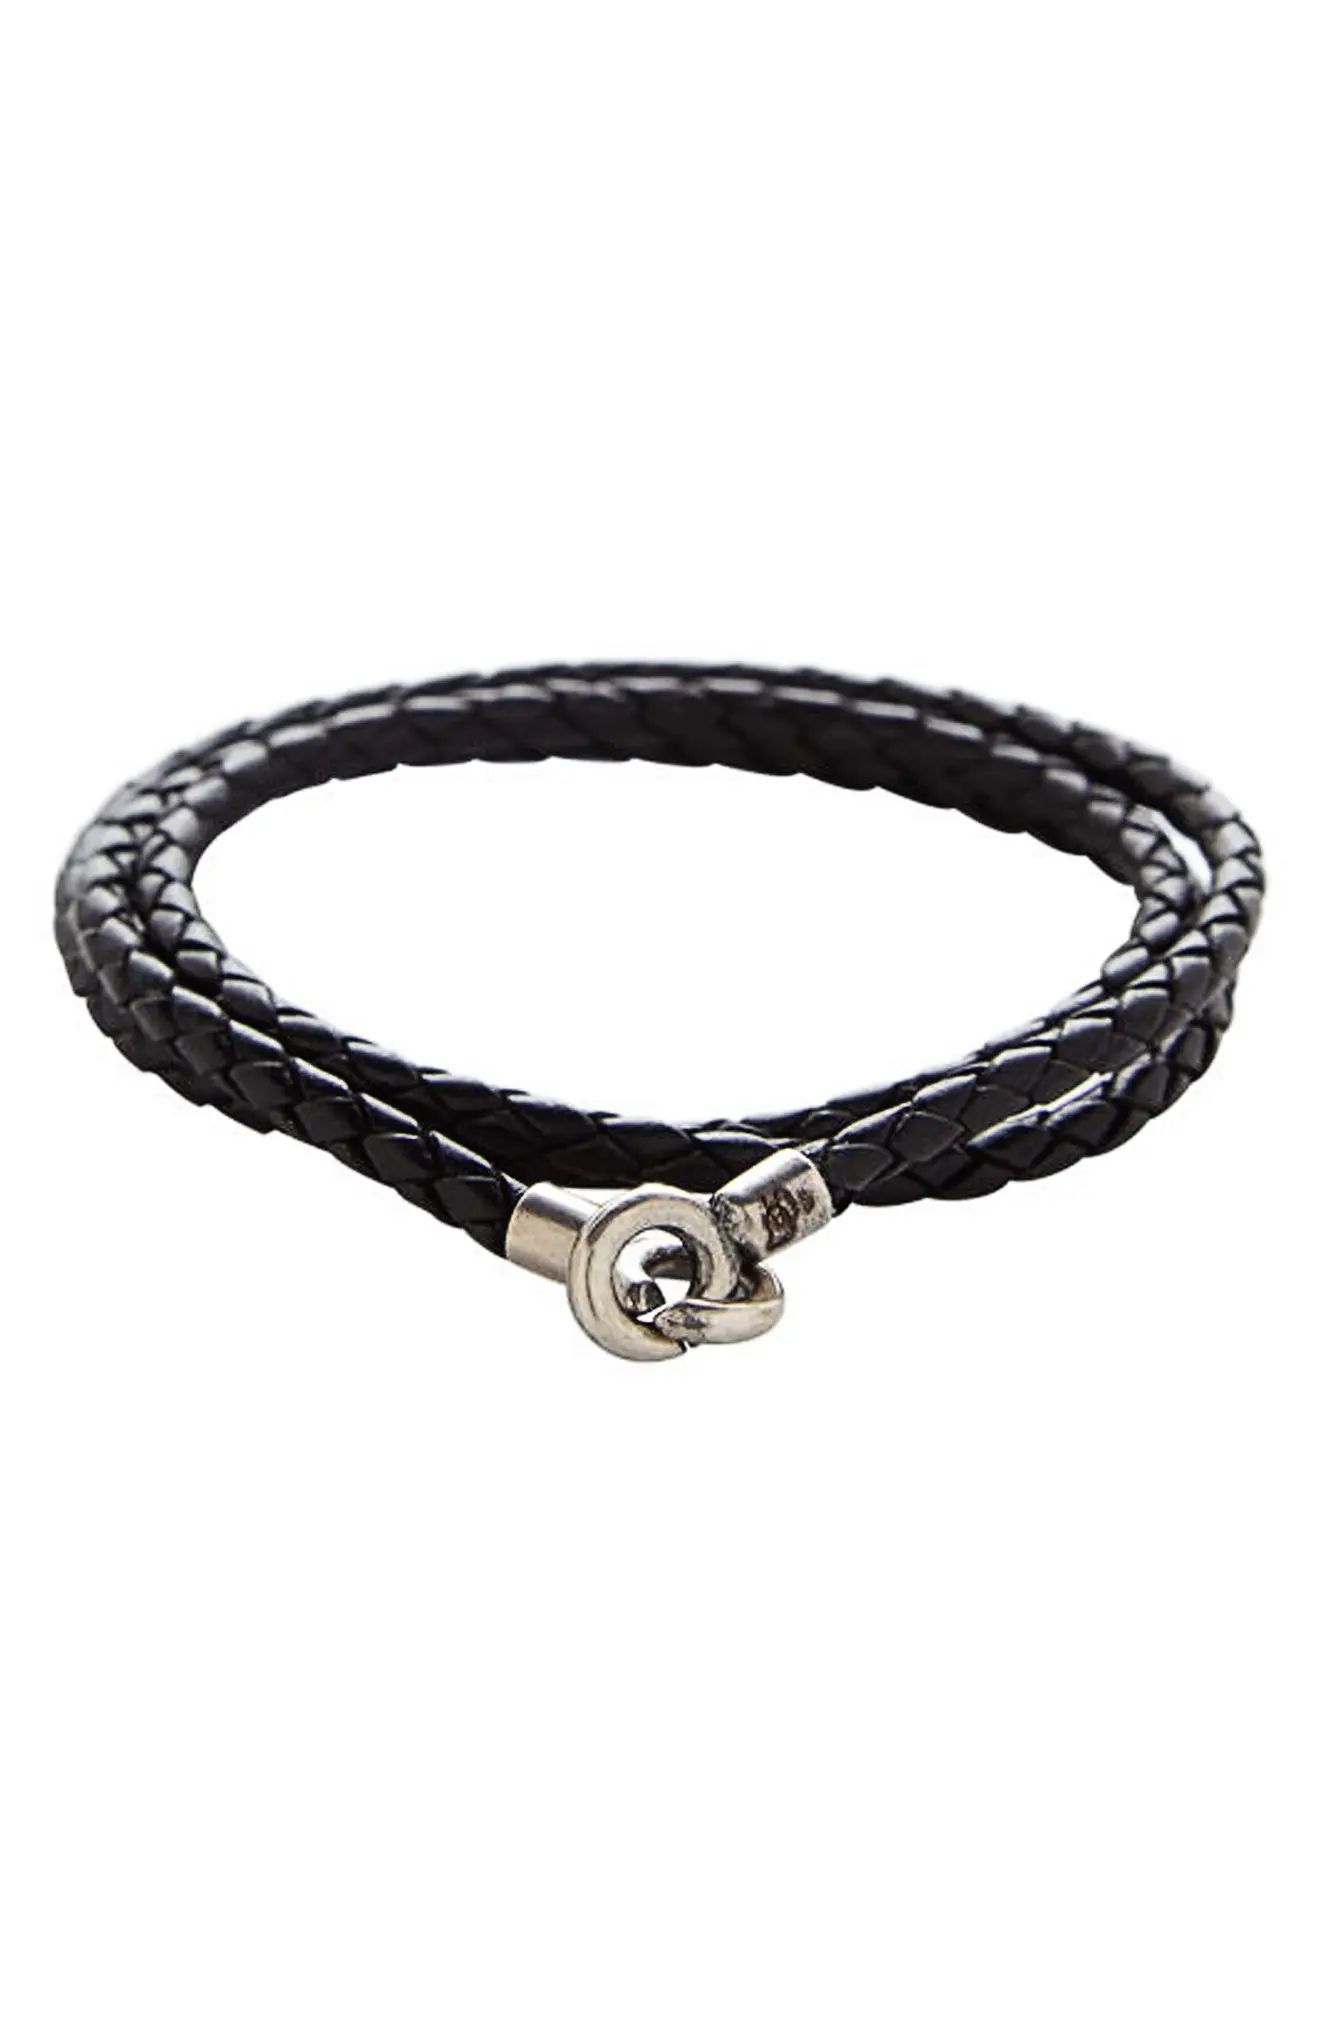 Degs & Sal Leather Wrap Bracelet | Nordstrom